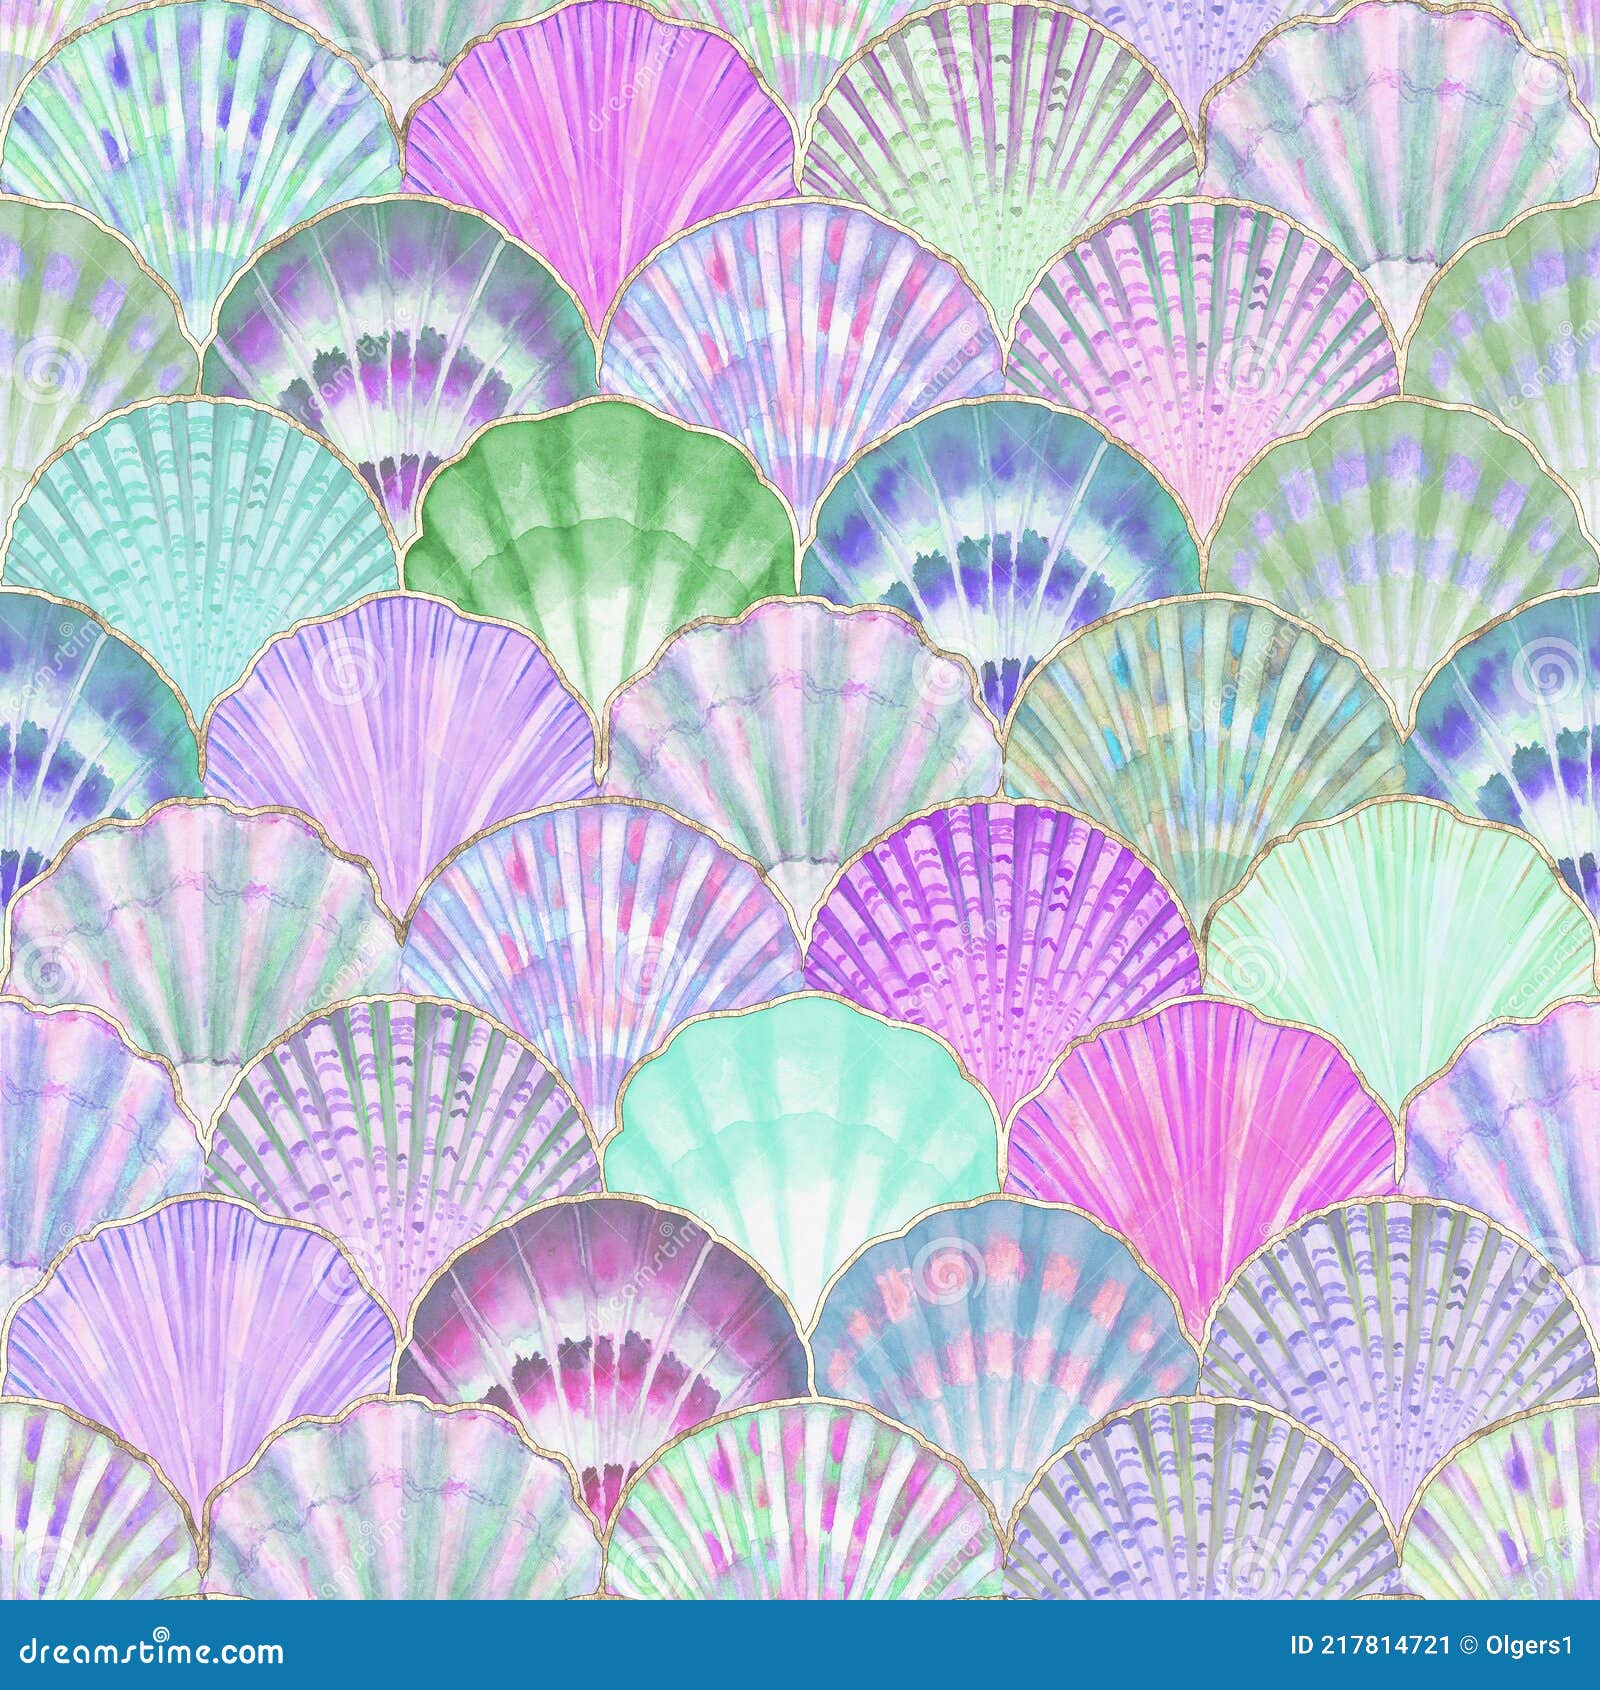 watercolor sea shell seamless pattern. hand drawn seashells texture vintage ocean background